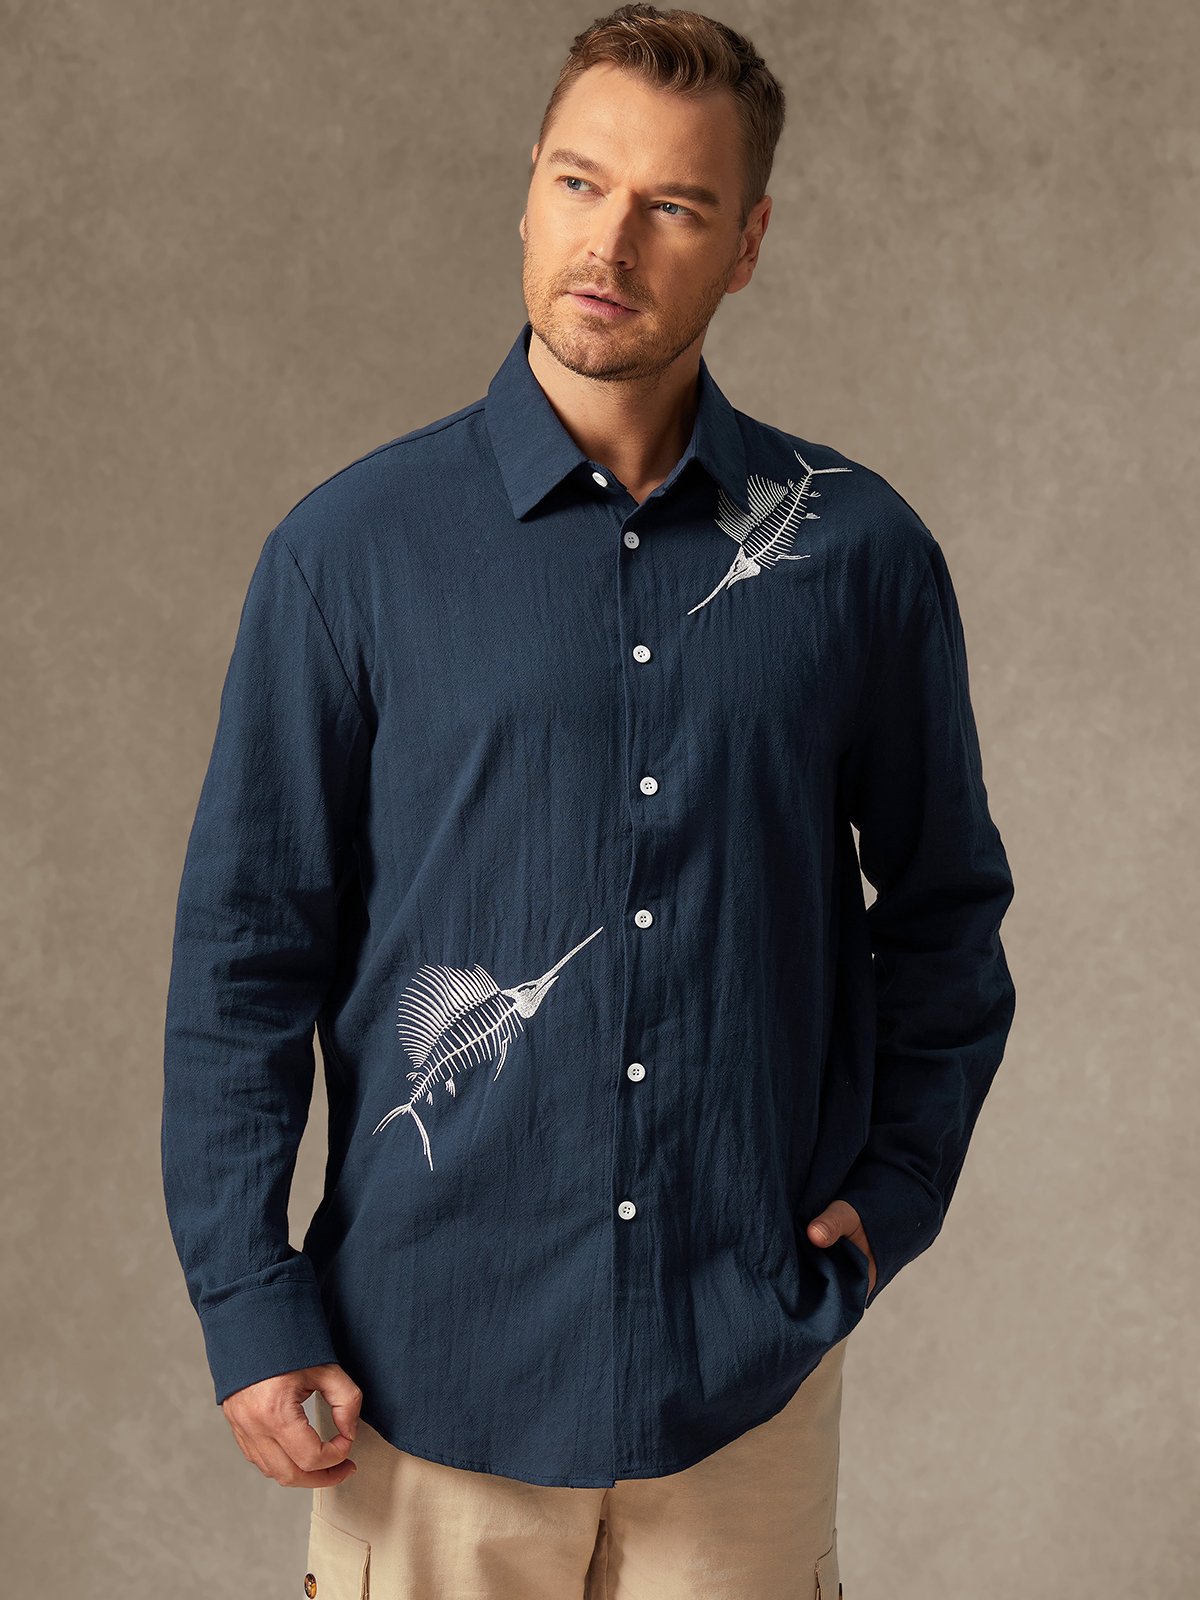 Hardaddy Herringbone Embroidered Long Sleeve Casual Shirt